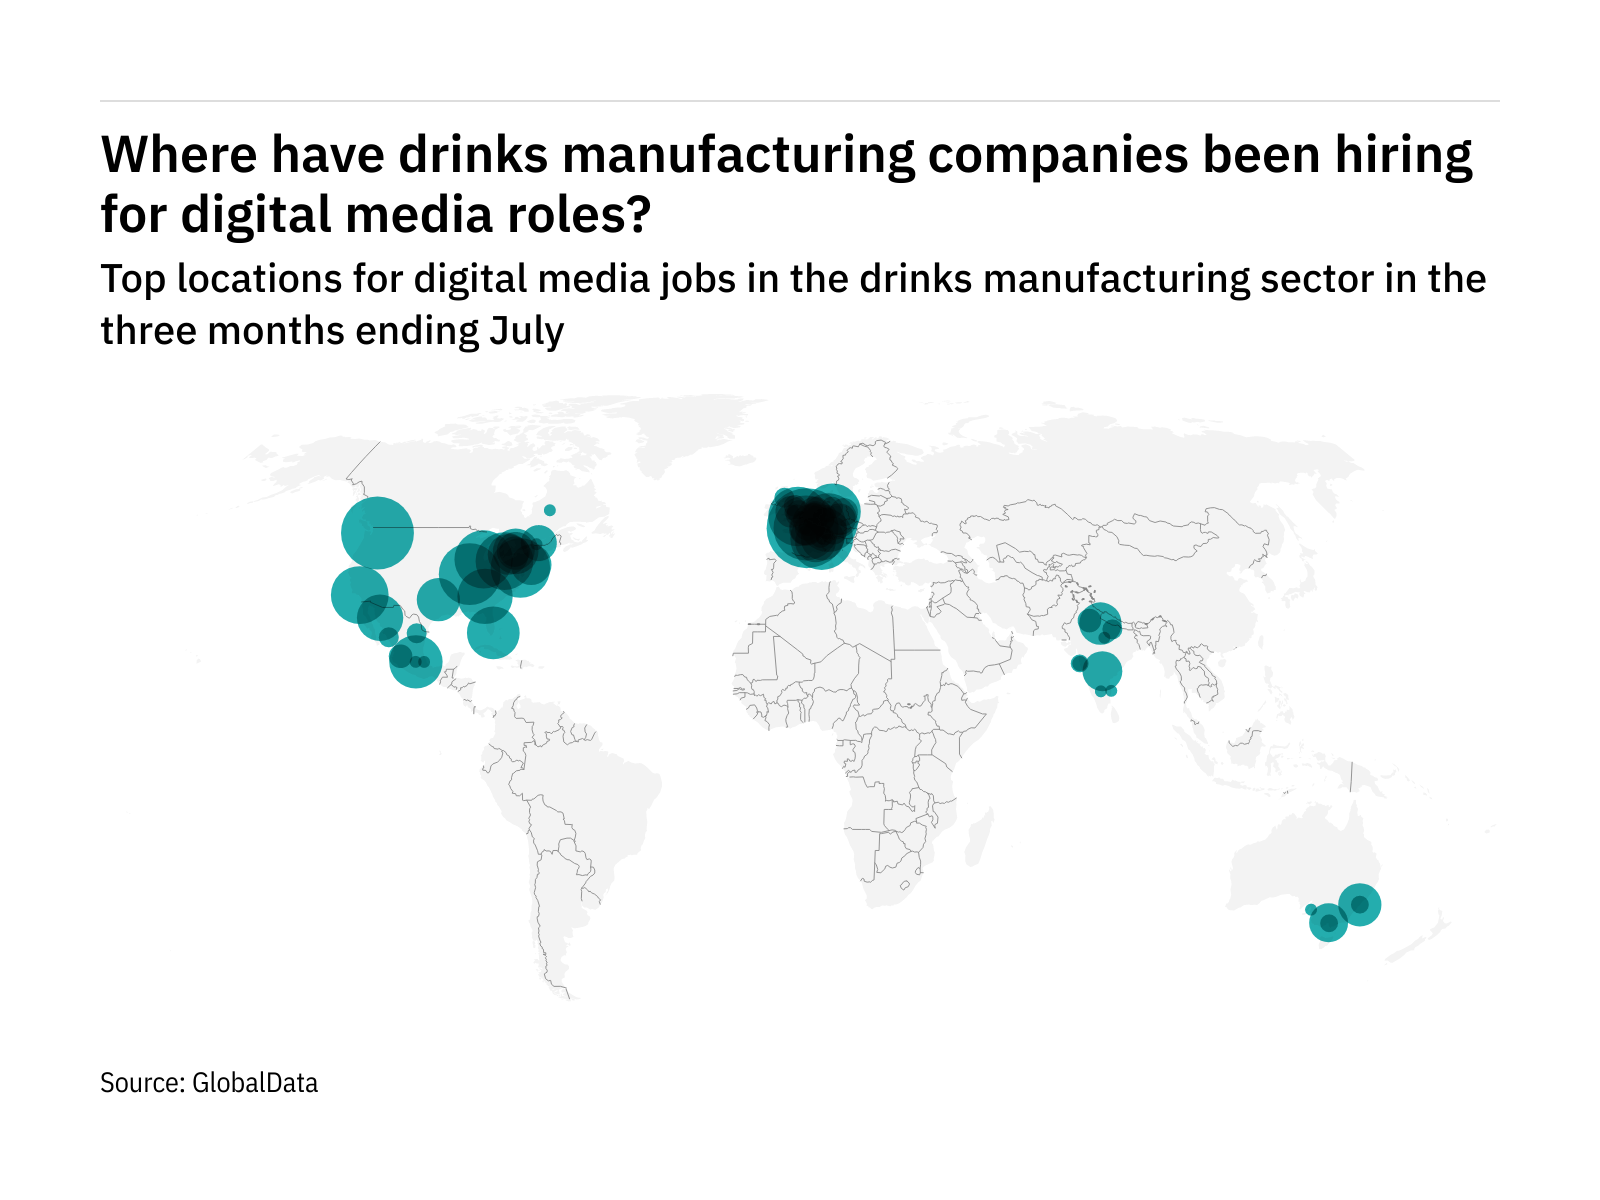 Drinks industry hiring for digital media roles jumps in North America